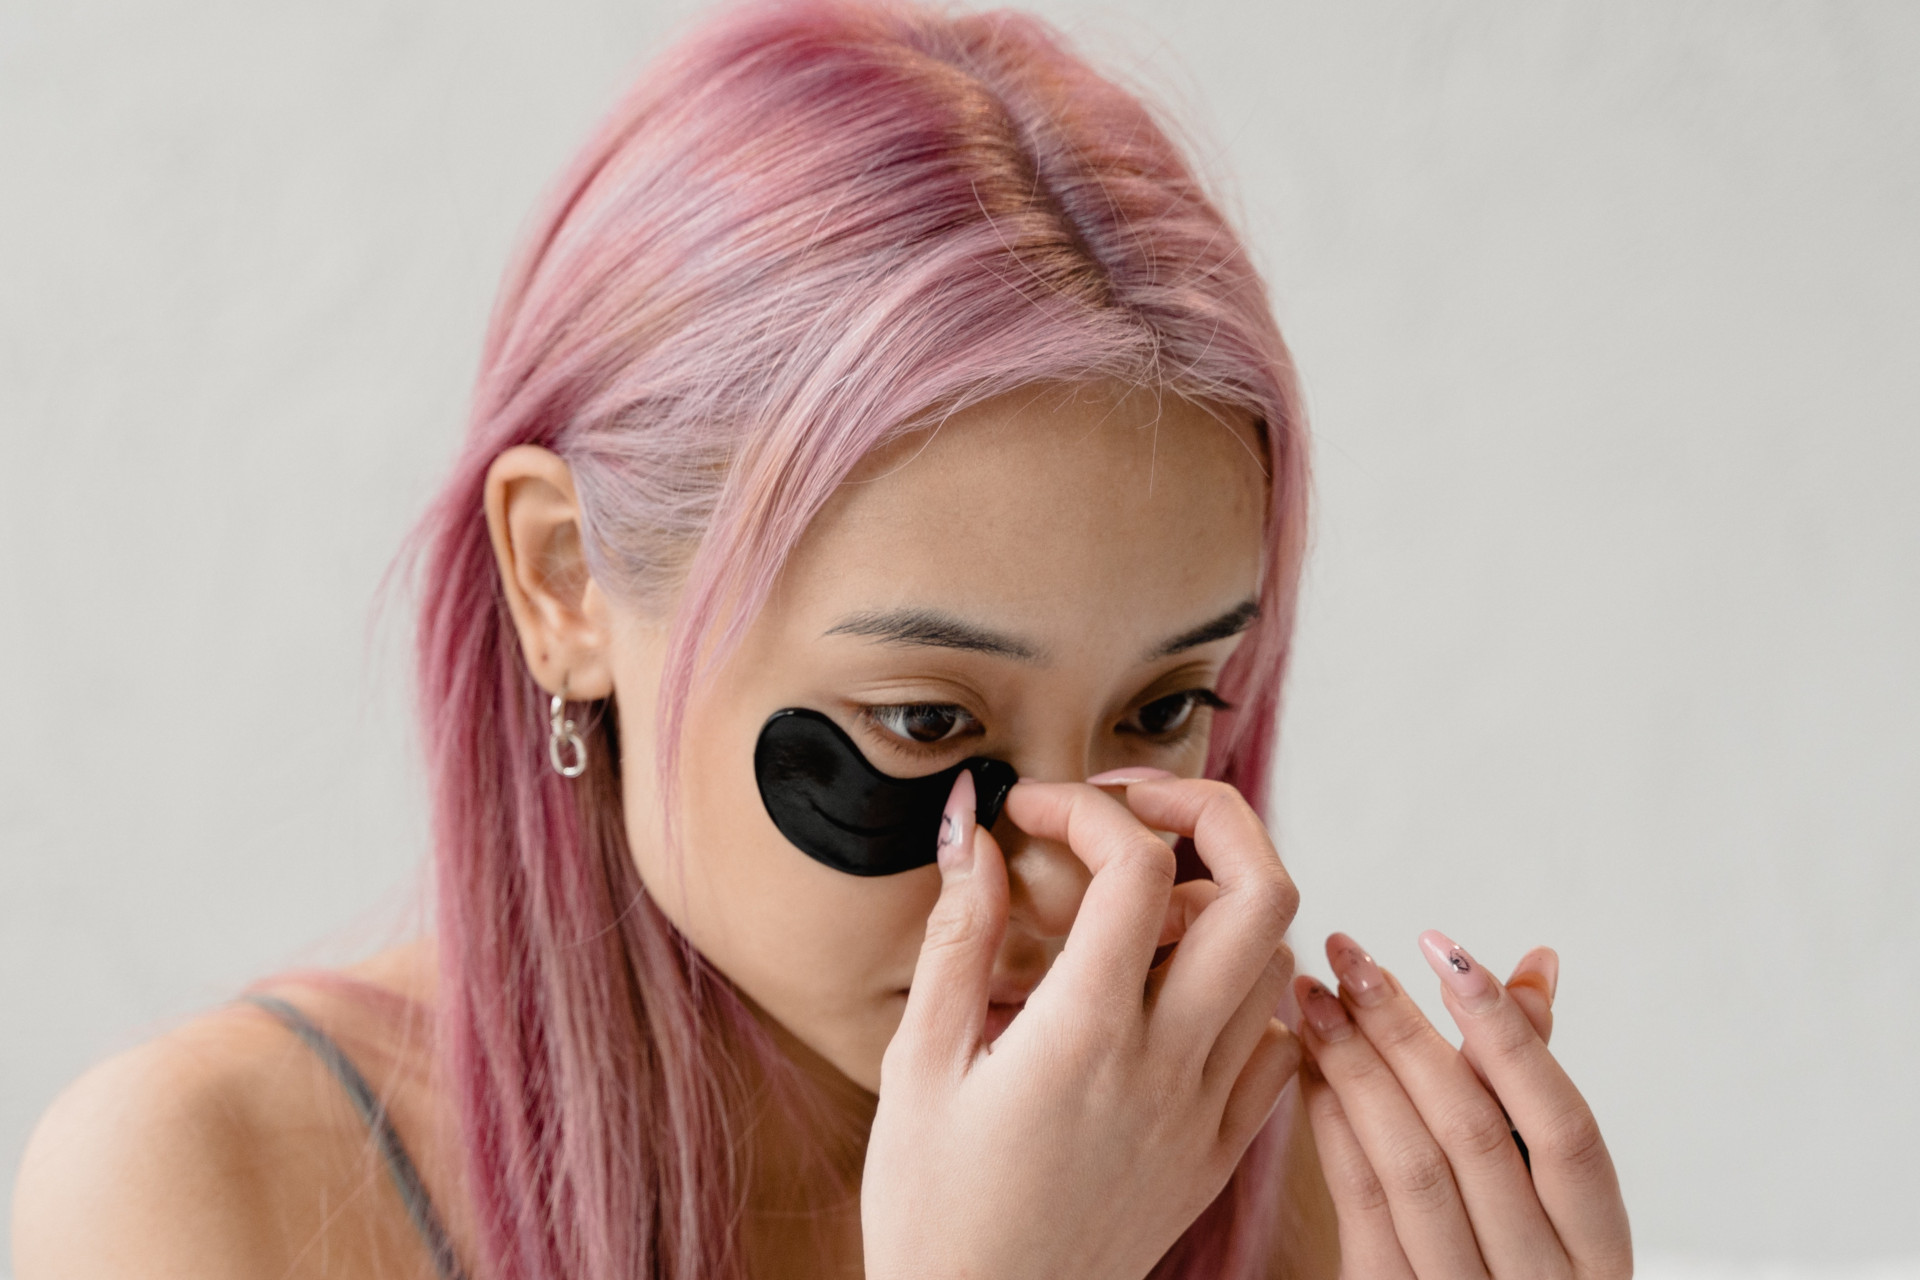 Woman with pink hair applying black eye mask